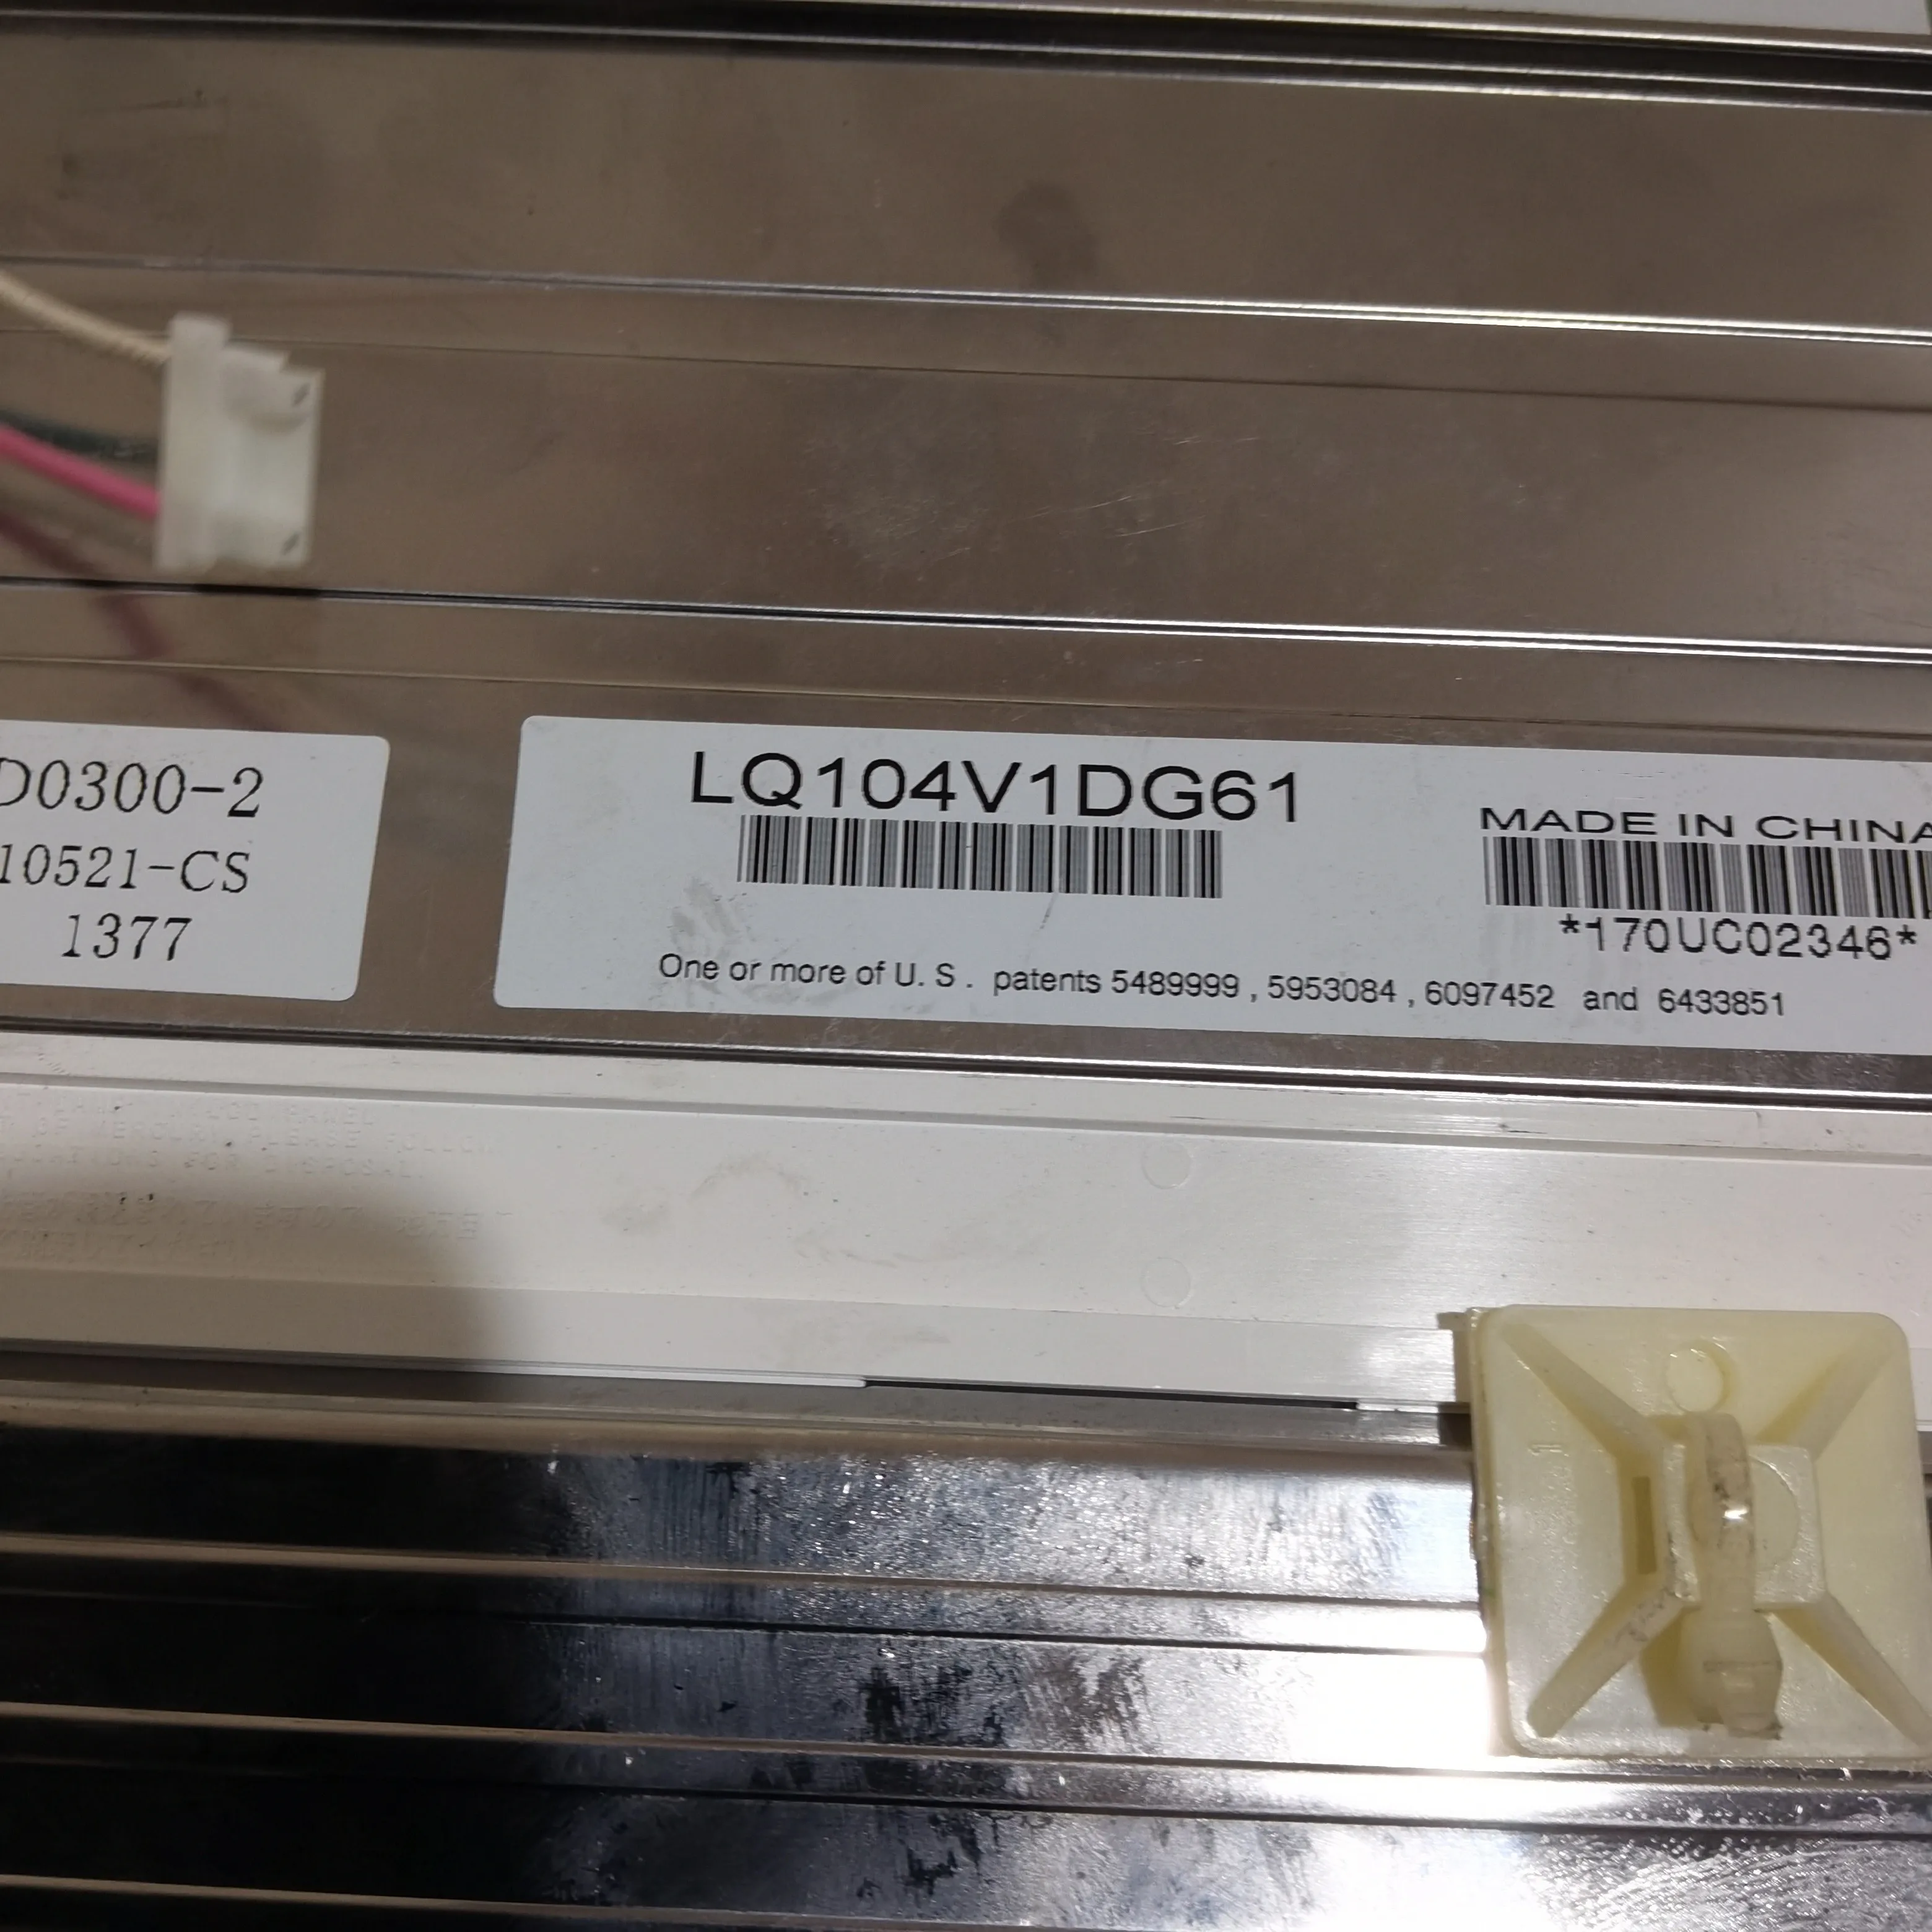 100% Original Test หน้าจอ LCD LQ104V1DG61 10.4นิ้ว